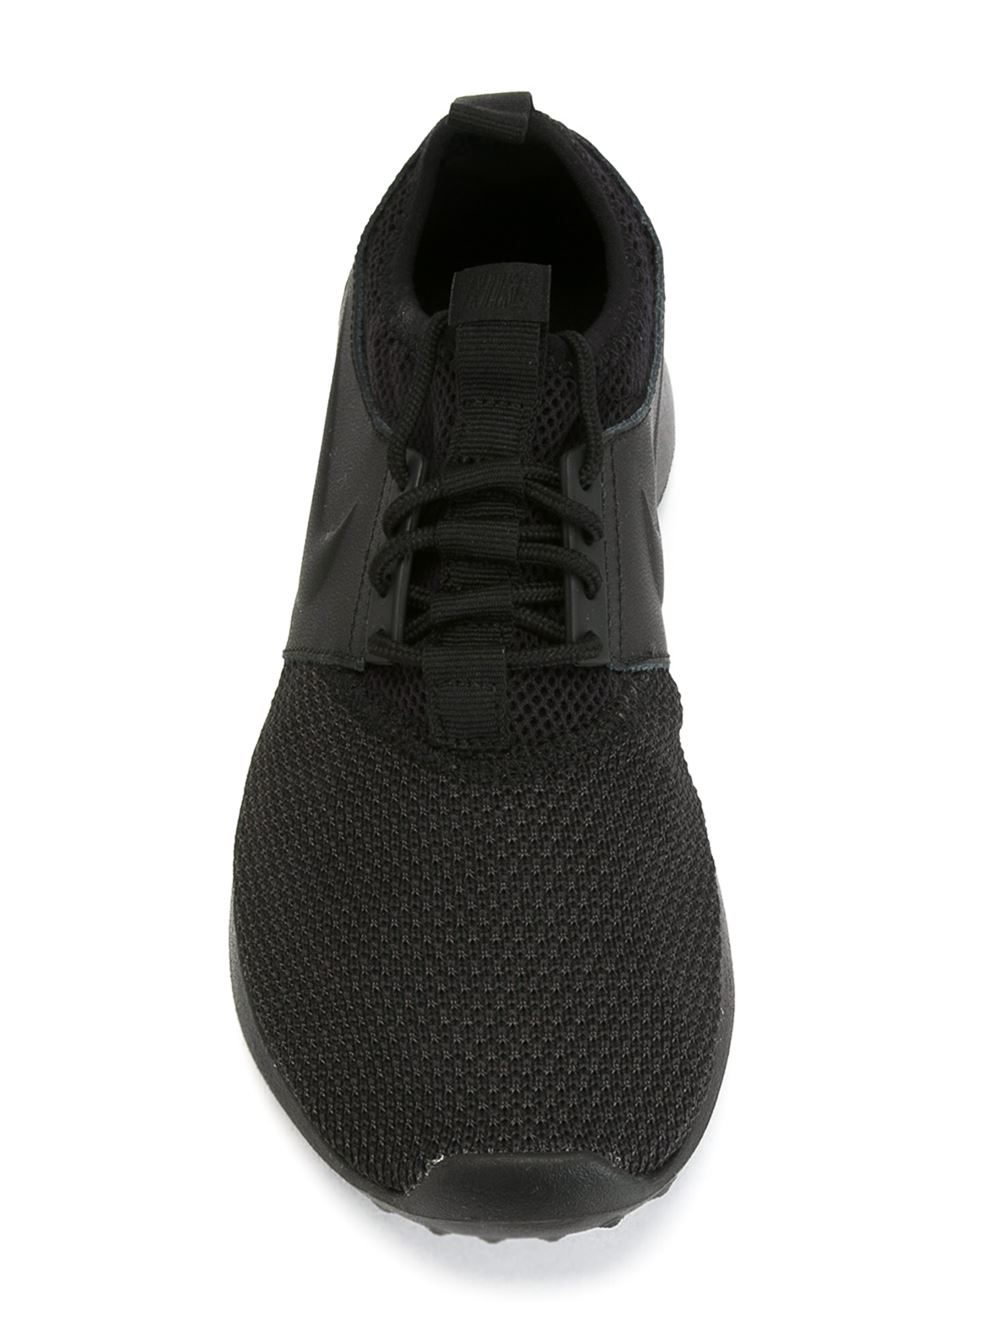 Nike 'juvenate Txt' Sneakers in Black for Men - Lyst